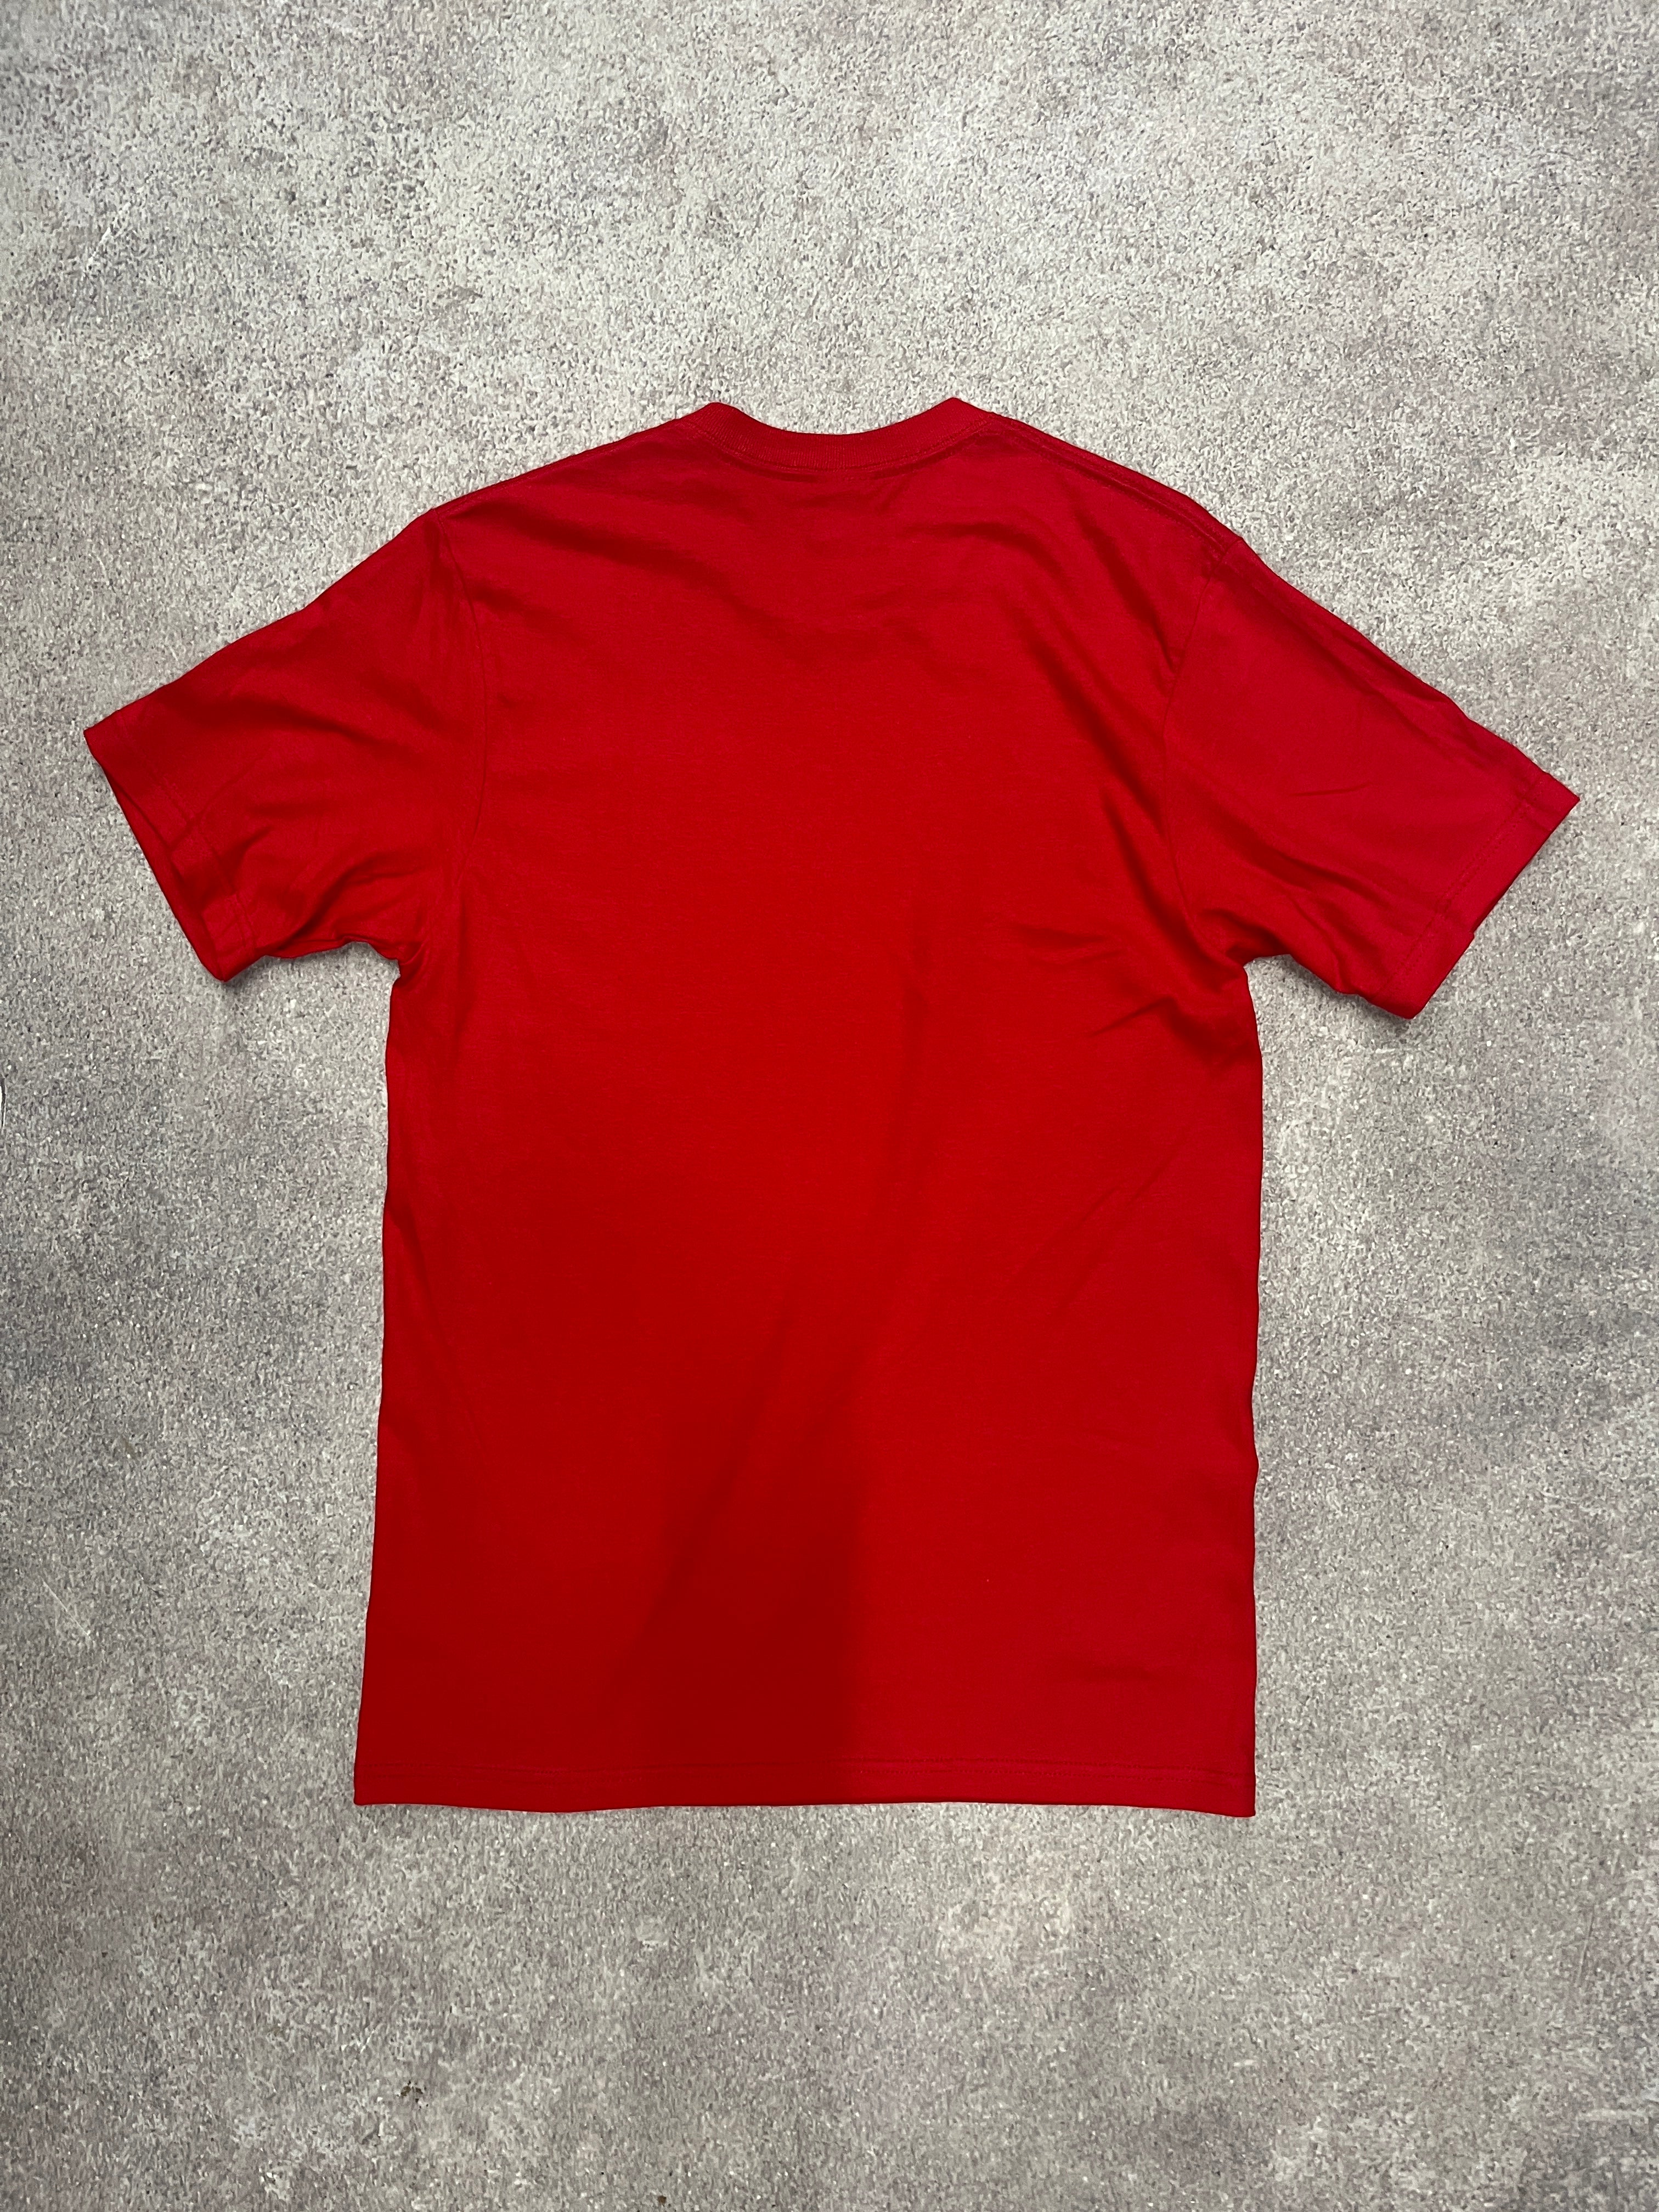 Supreme Banner TShirt Red // Medium - RHAGHOUSE VINTAGE